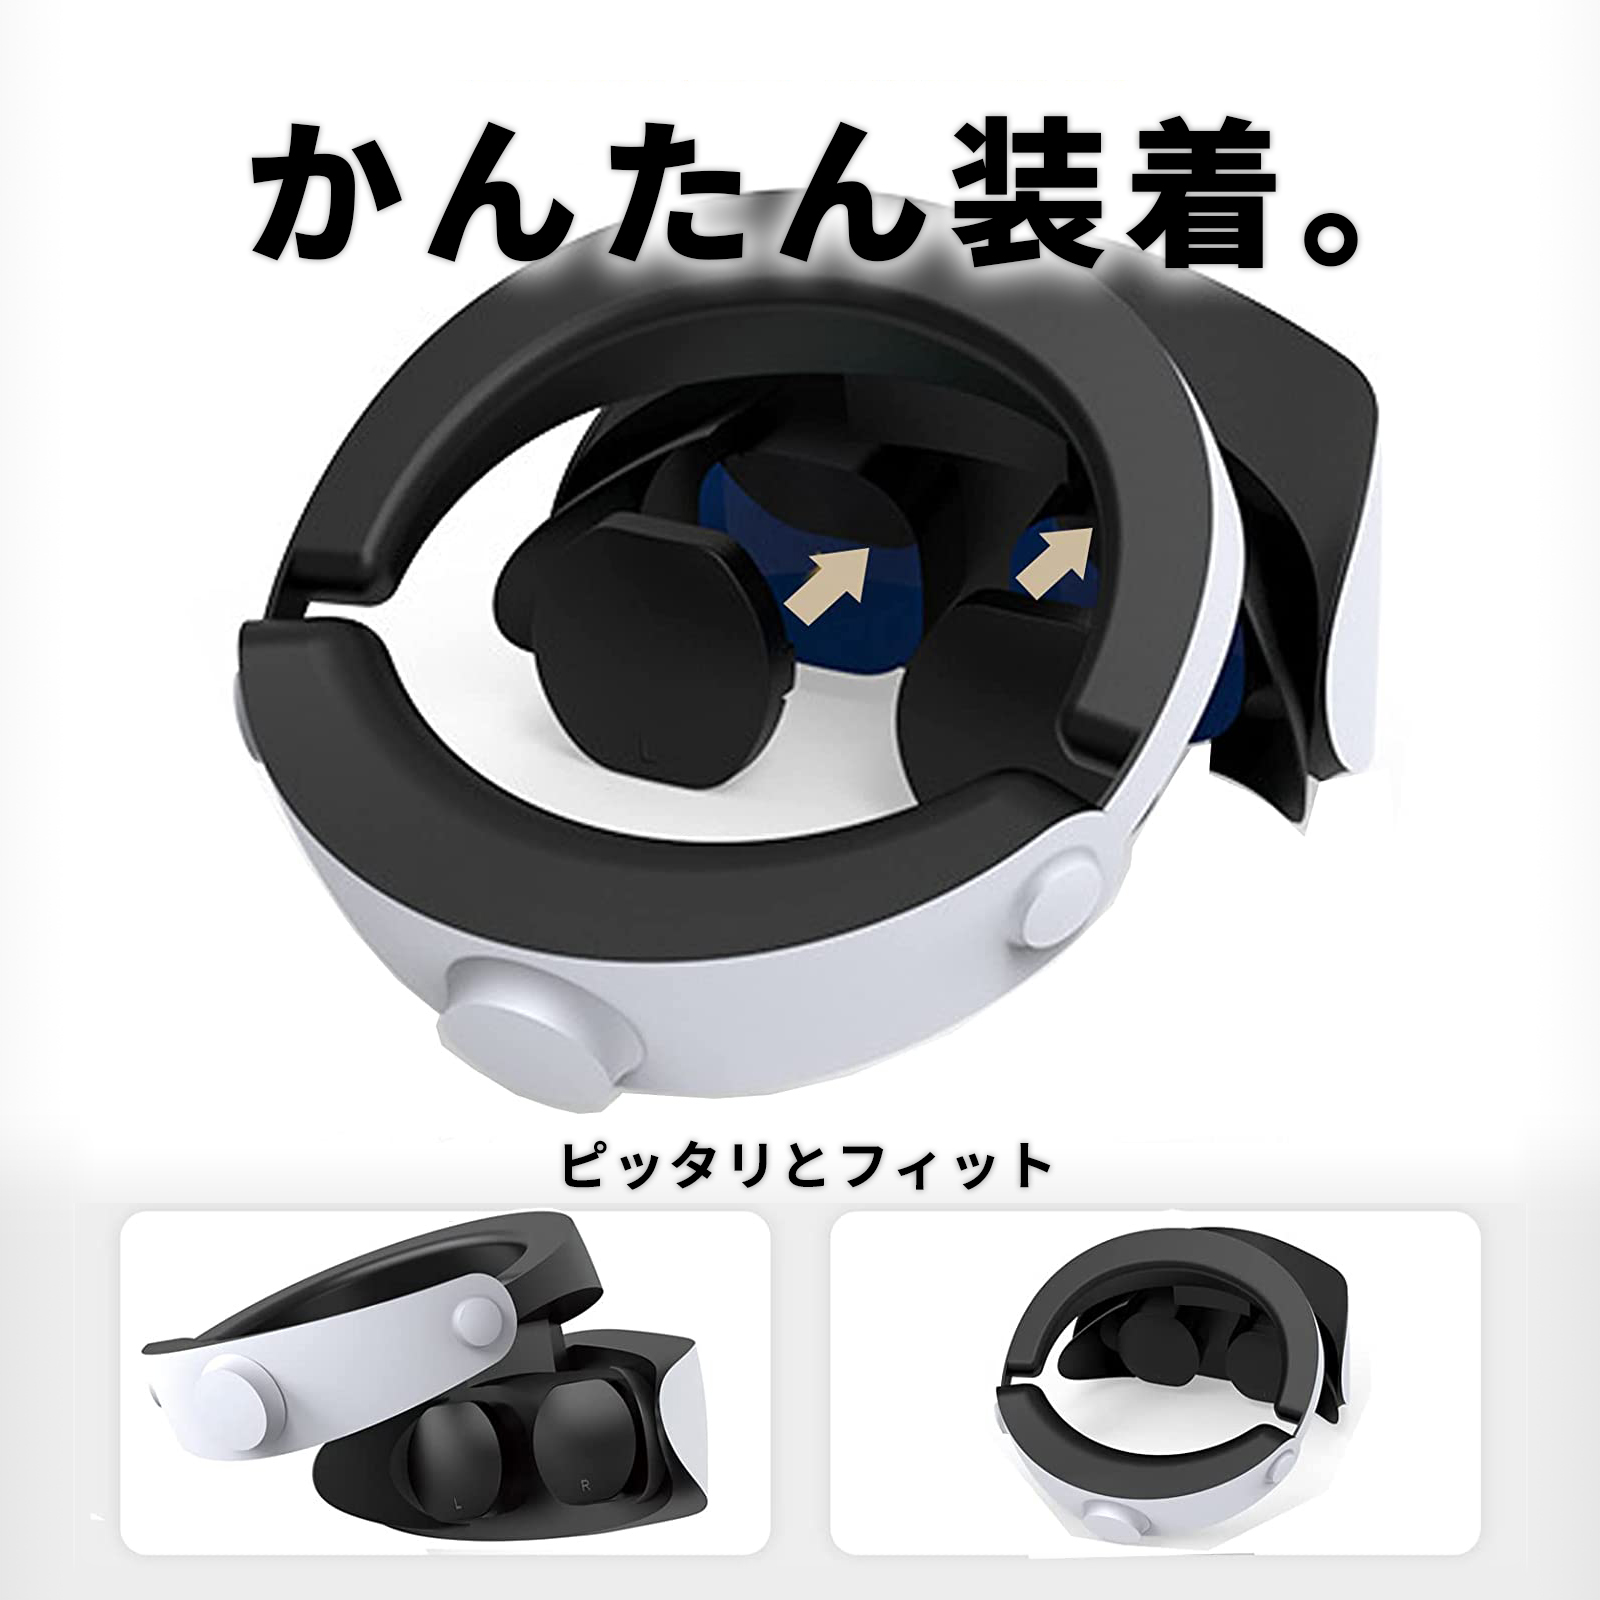 PS5 PlayStation VR2 Sense ゴーグル 保護 レンズ カバー PSVR VR2